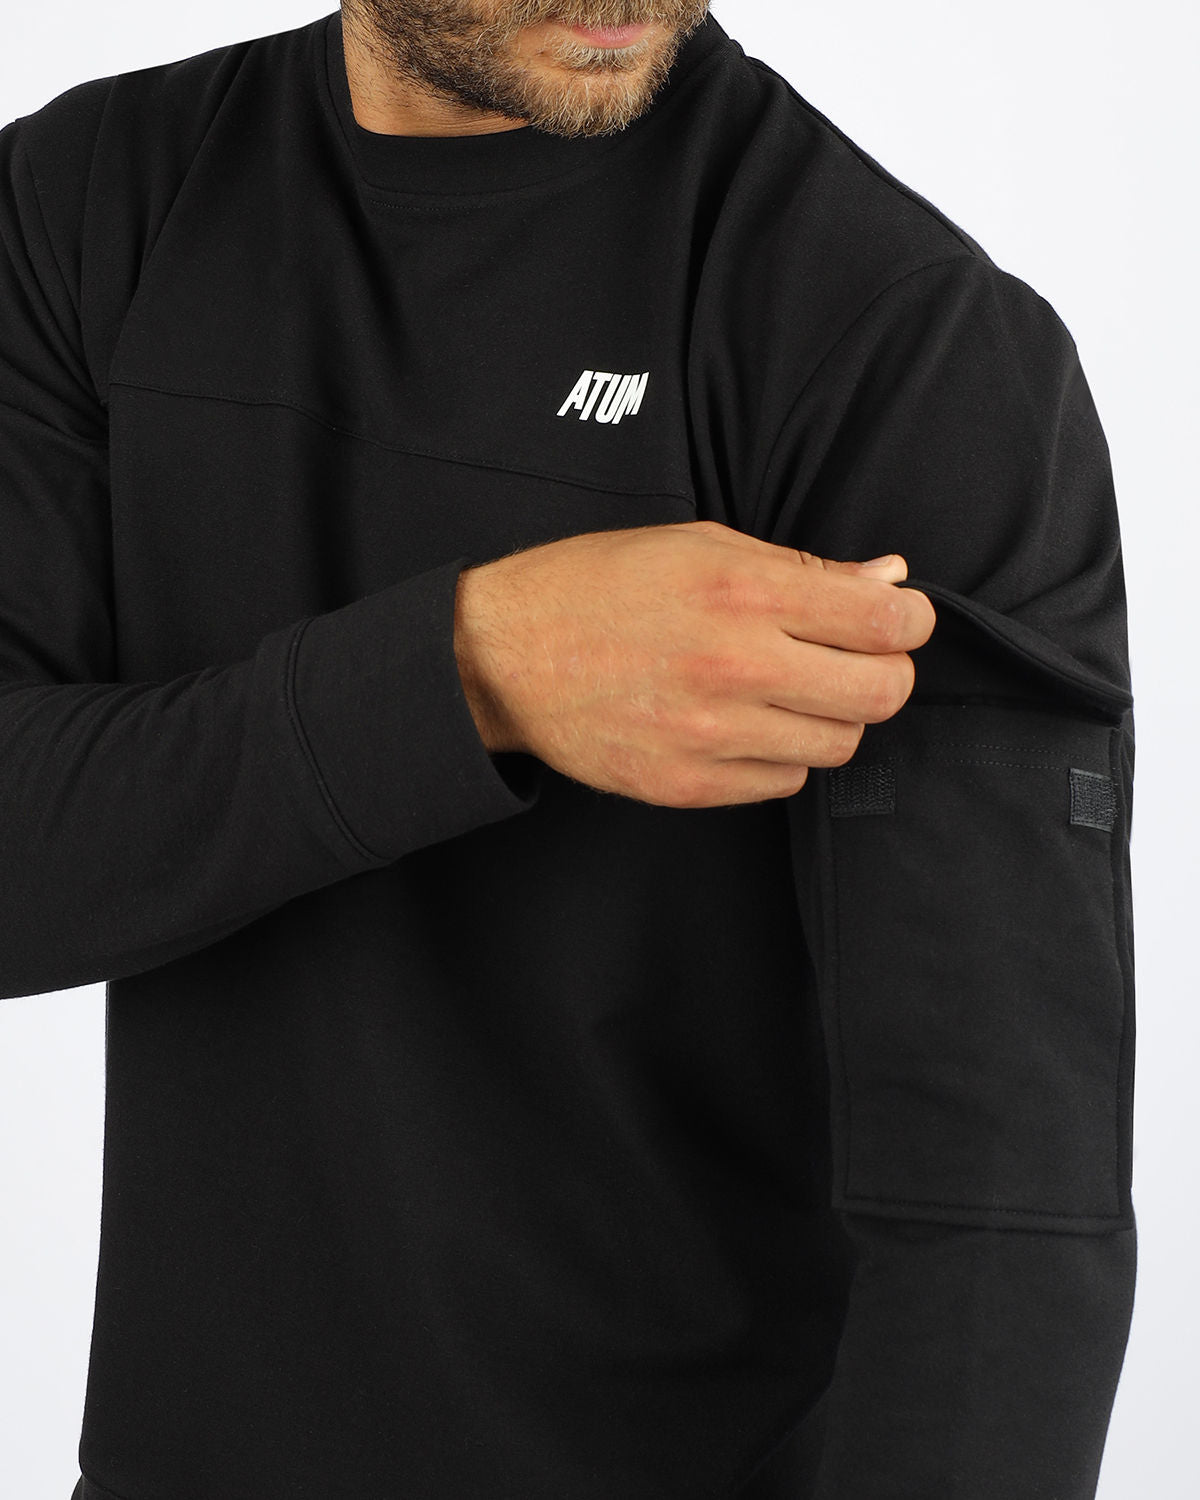 Atum Men's Long-Sleeve T-Shirt - Atum Egypt